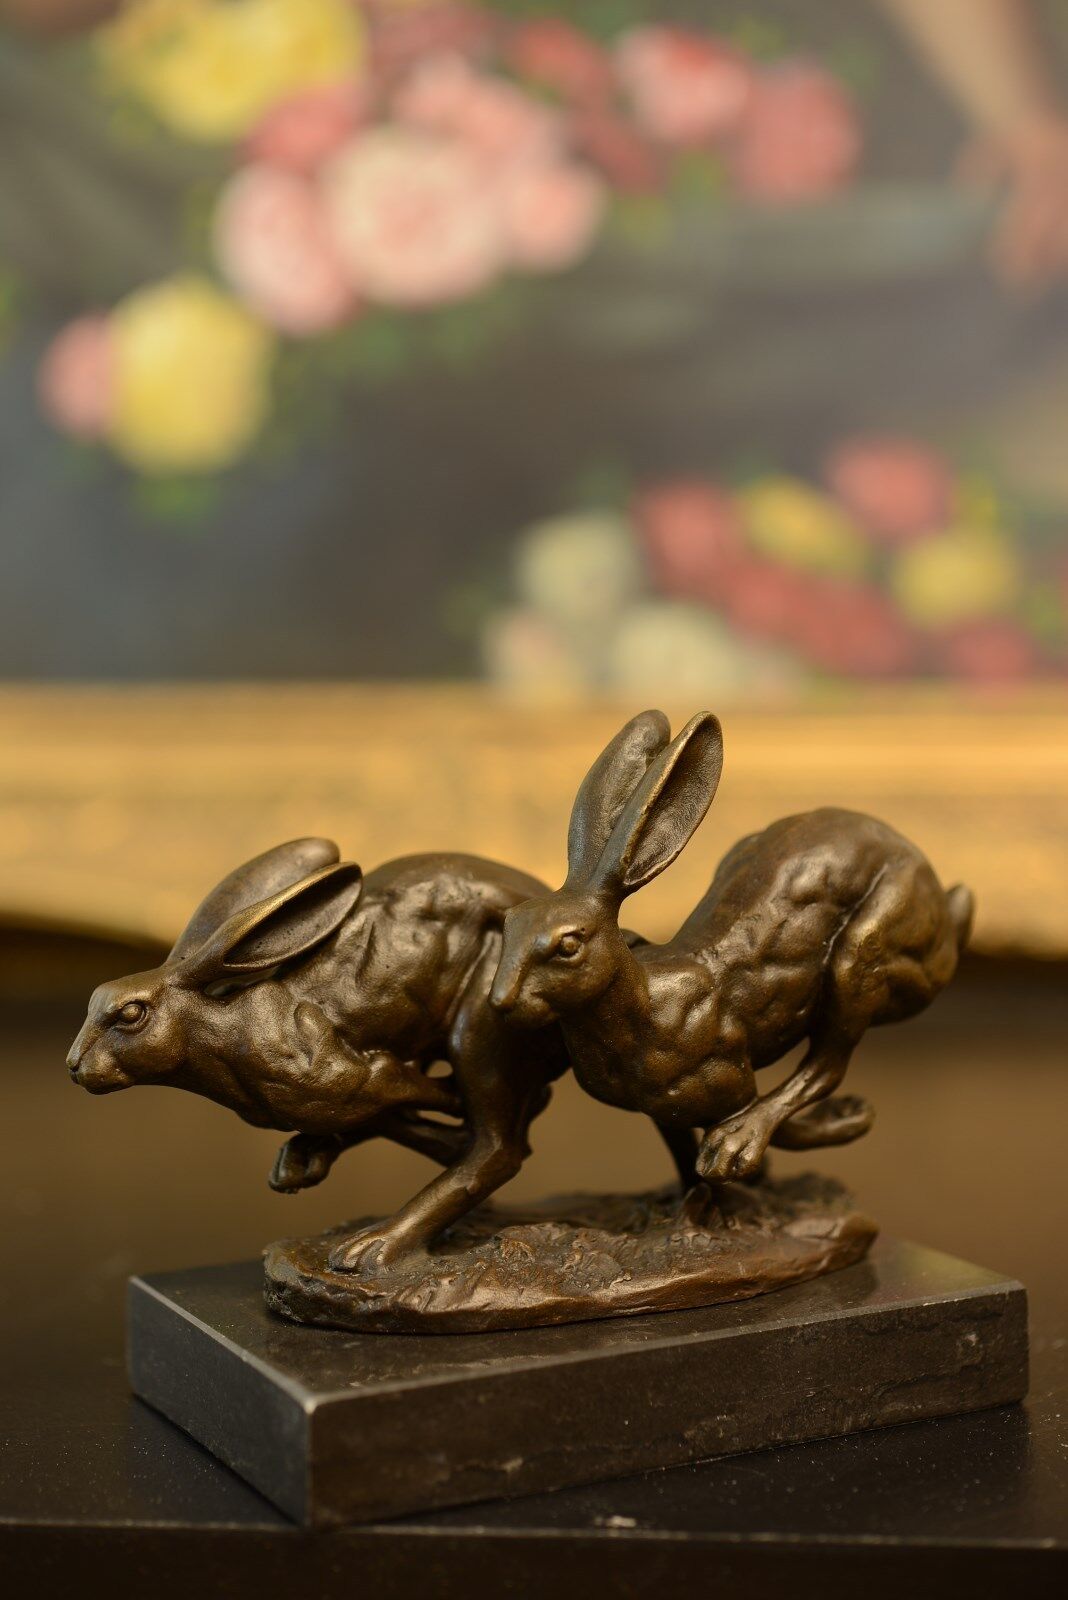 Signed: NICK, Bronze statue Two running rabbits Bronze Sculpture